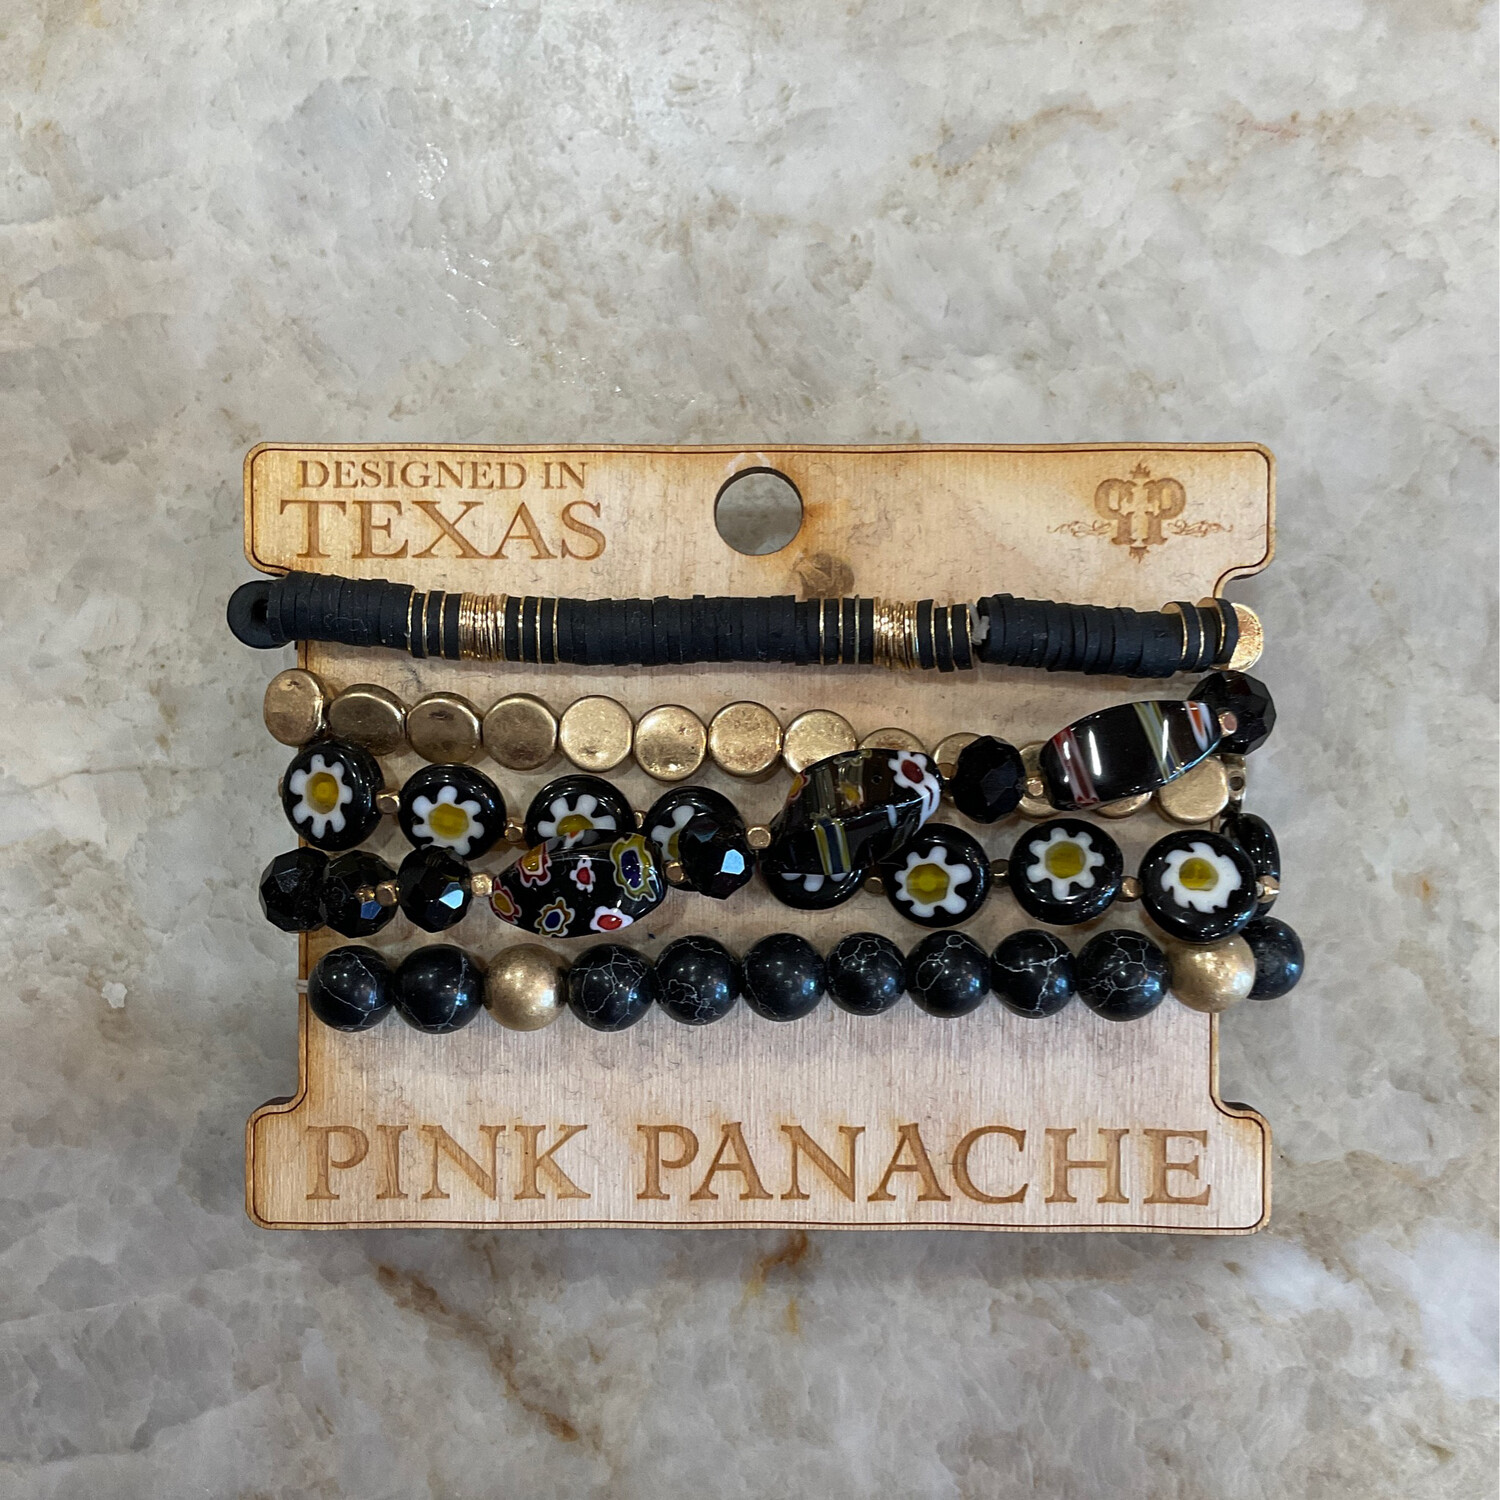 Pink Panache PB-16 5 Strand Stretch Bracelet Black Tones 